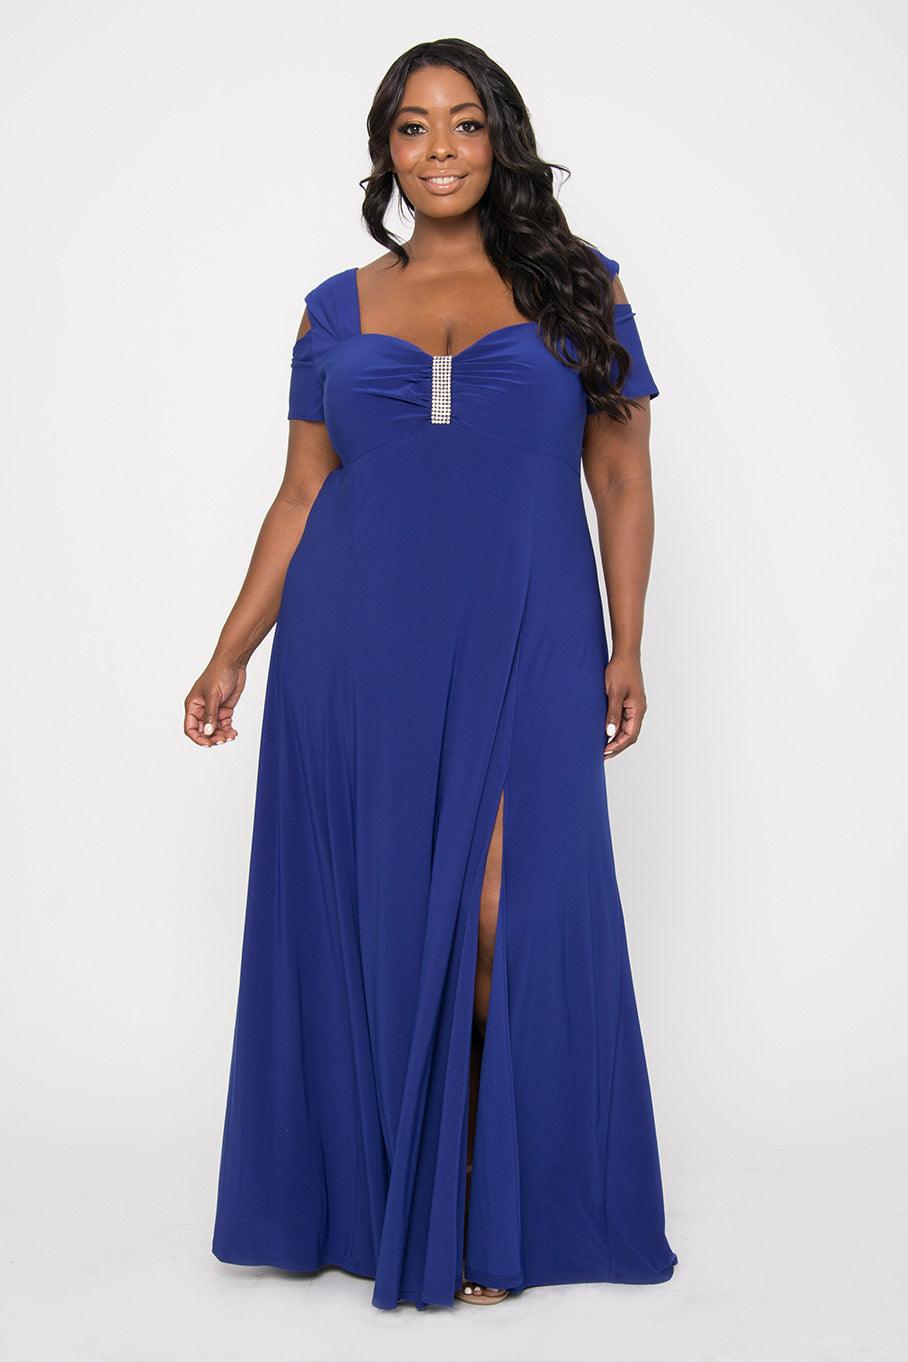 Black R&M Richards 1367W Long Plus Size Formal Evening Dress for $39.99 –  The Dress Outlet